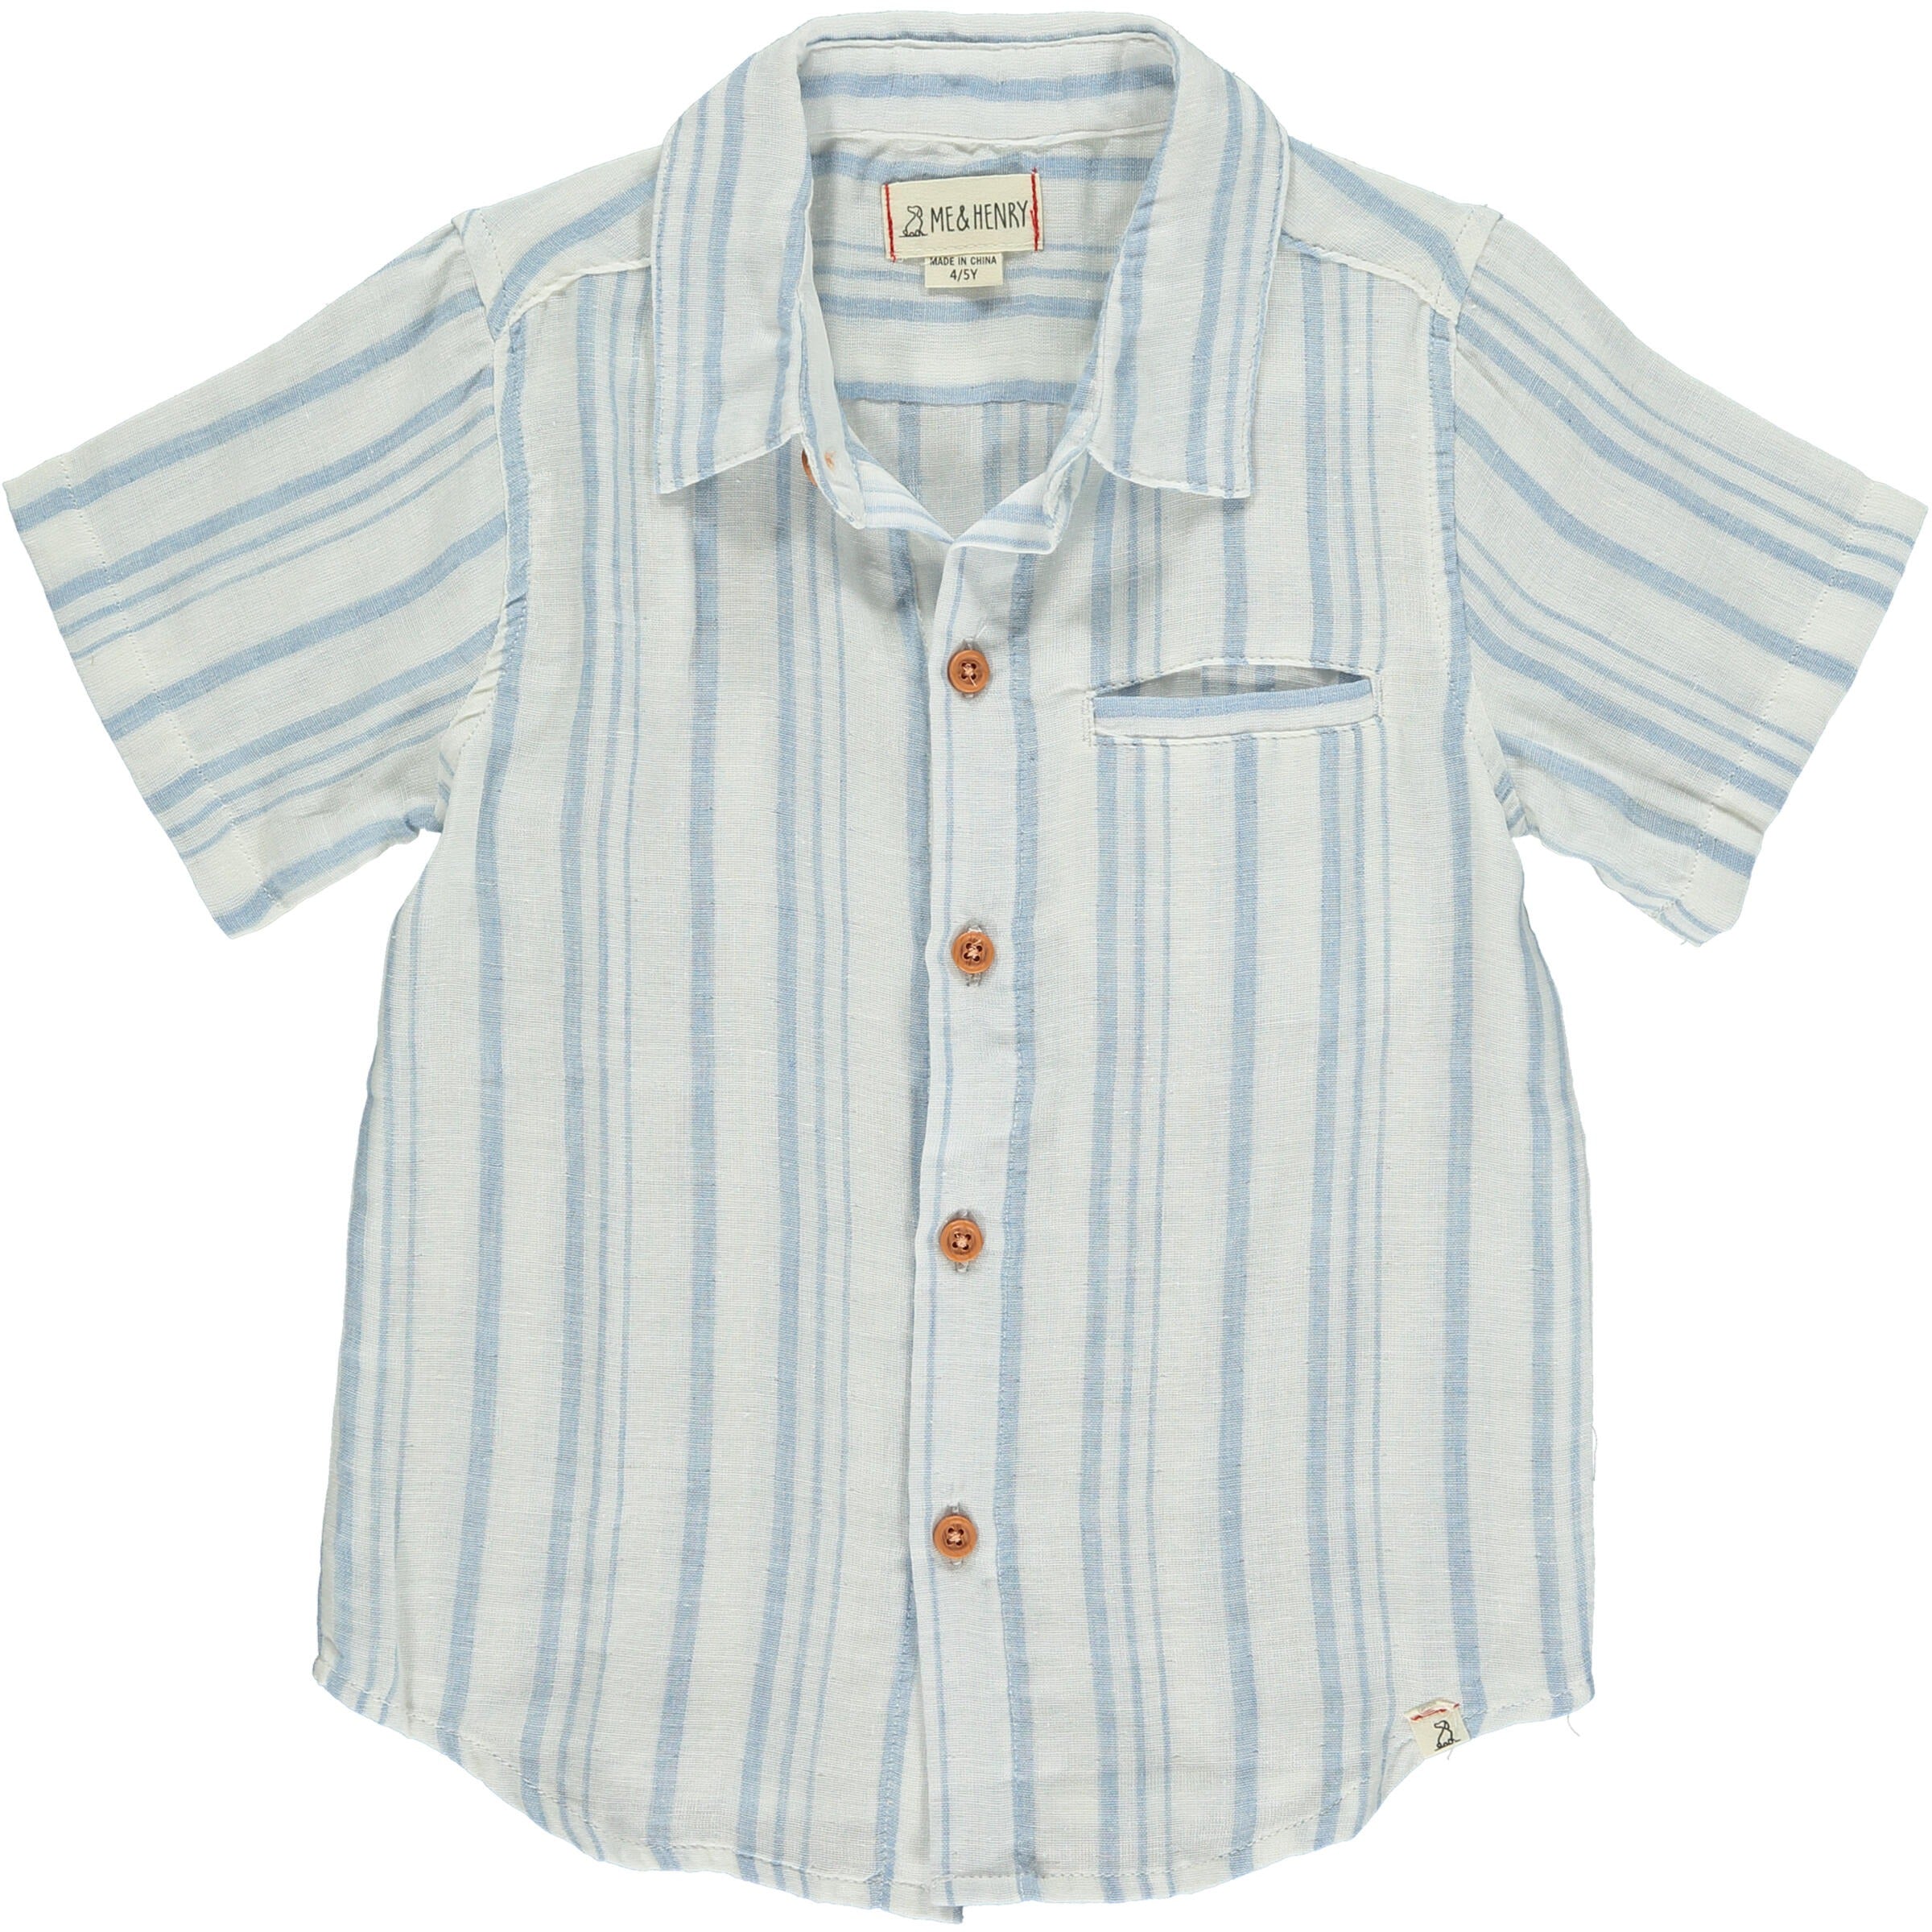 Newport Shirt - Blue/Cream Stripe